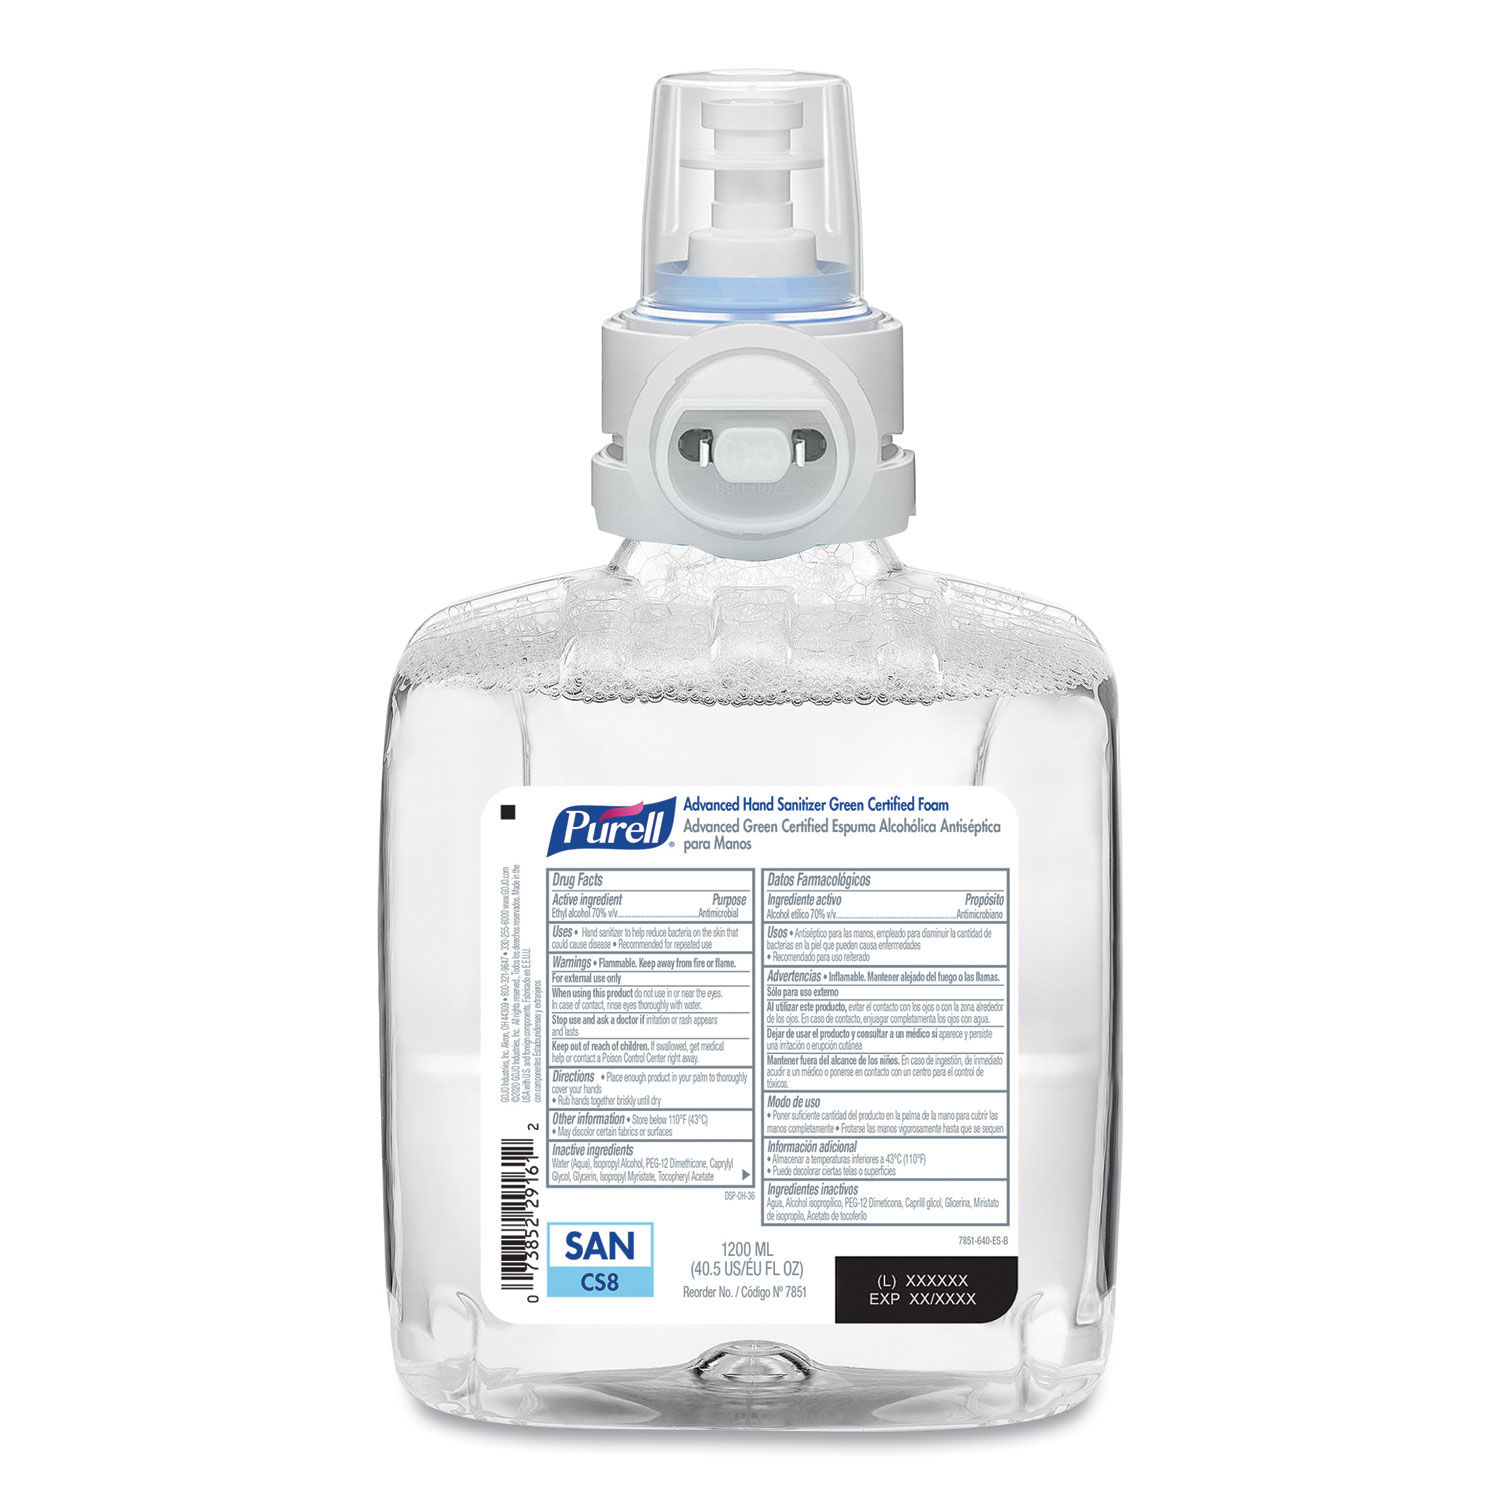 Advanced Hand Sanitizer Green Certified Foam Refill For CS8 Dispensers, 1,200 mL, Fragrance-Free, 2/Carton